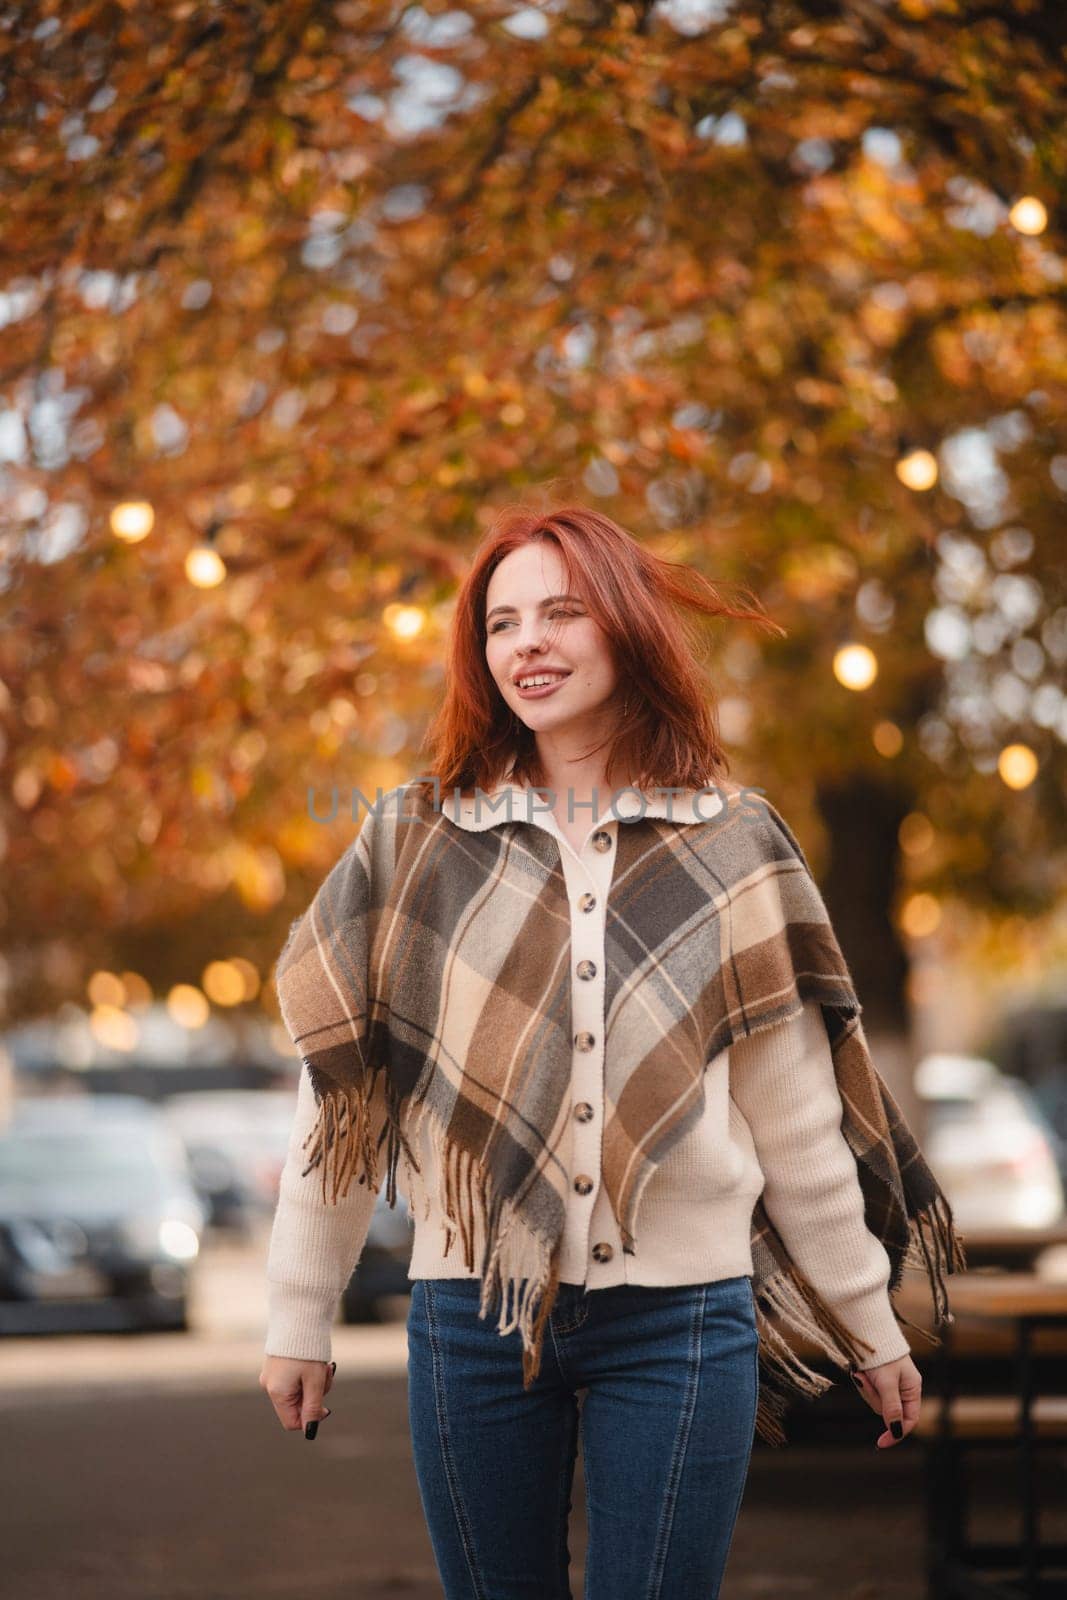 A spirited red-haired girl chuckles joyfully, adding charm to the autumn cityscape. by teksomolika